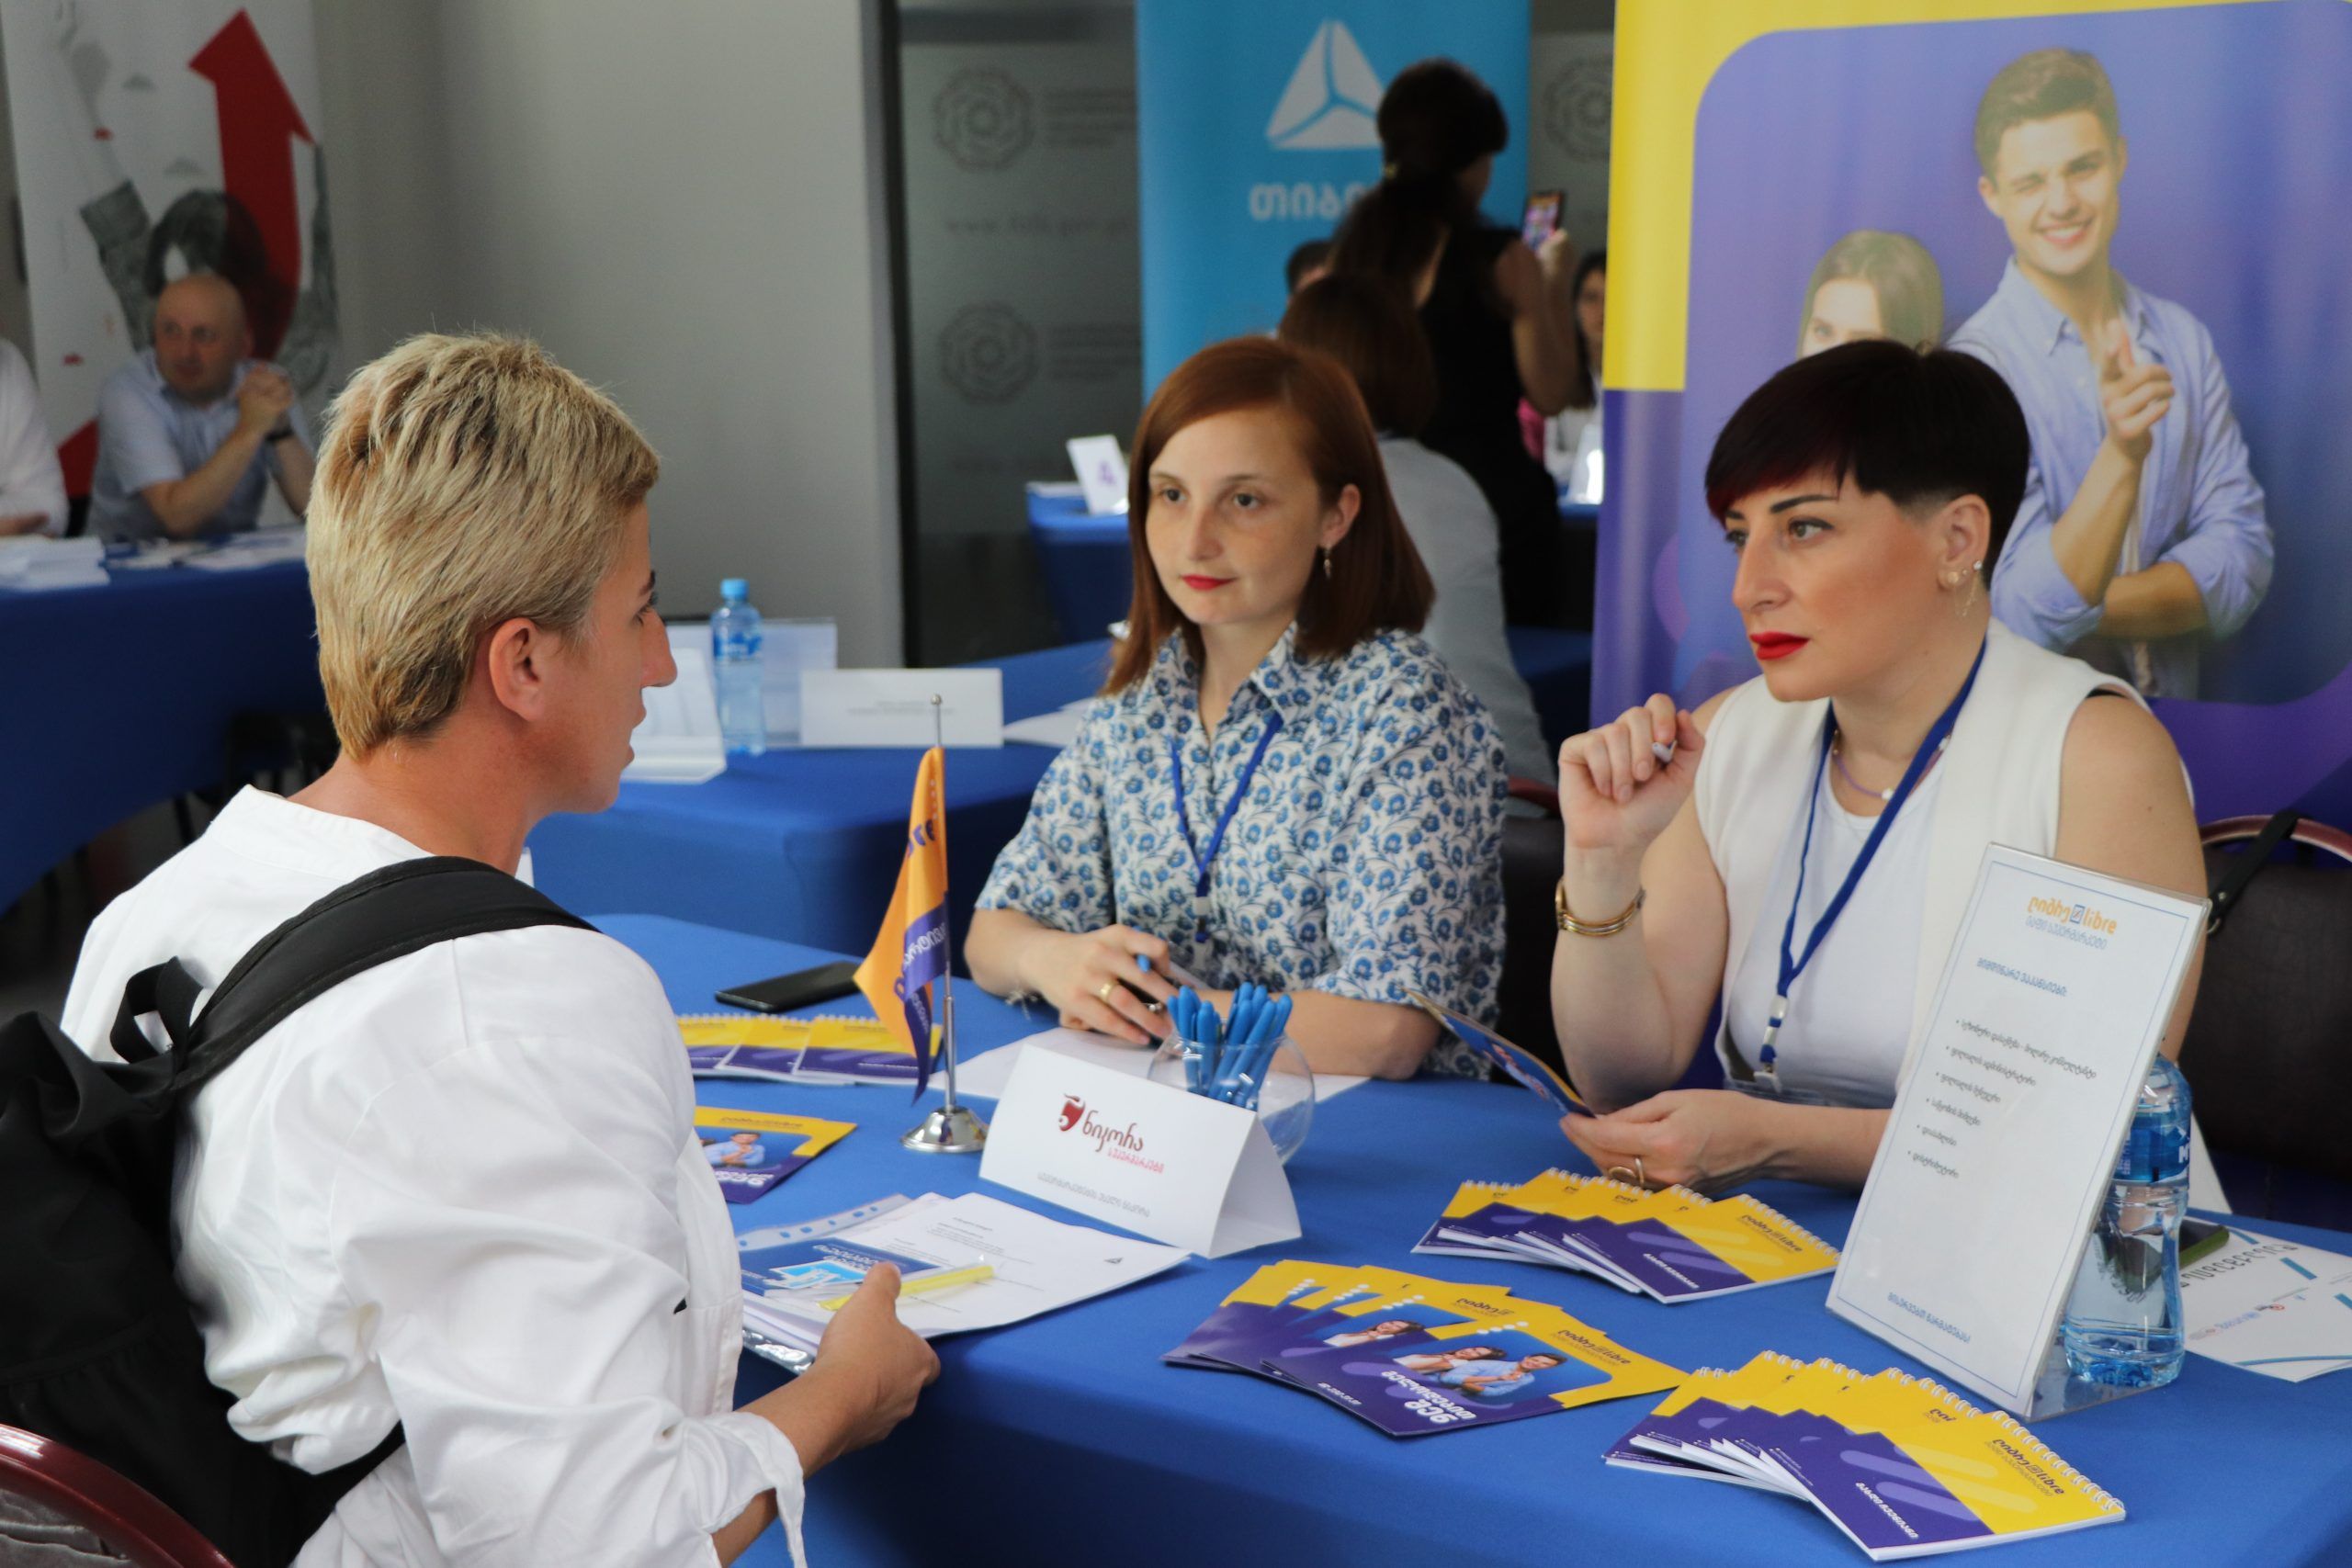 Employment forum was held in Ozurgeti with the support of the European Union /ევროკავშირის მხარდაჭერით ოზურგეთში დასაქმების ფორუმი გაიმართა